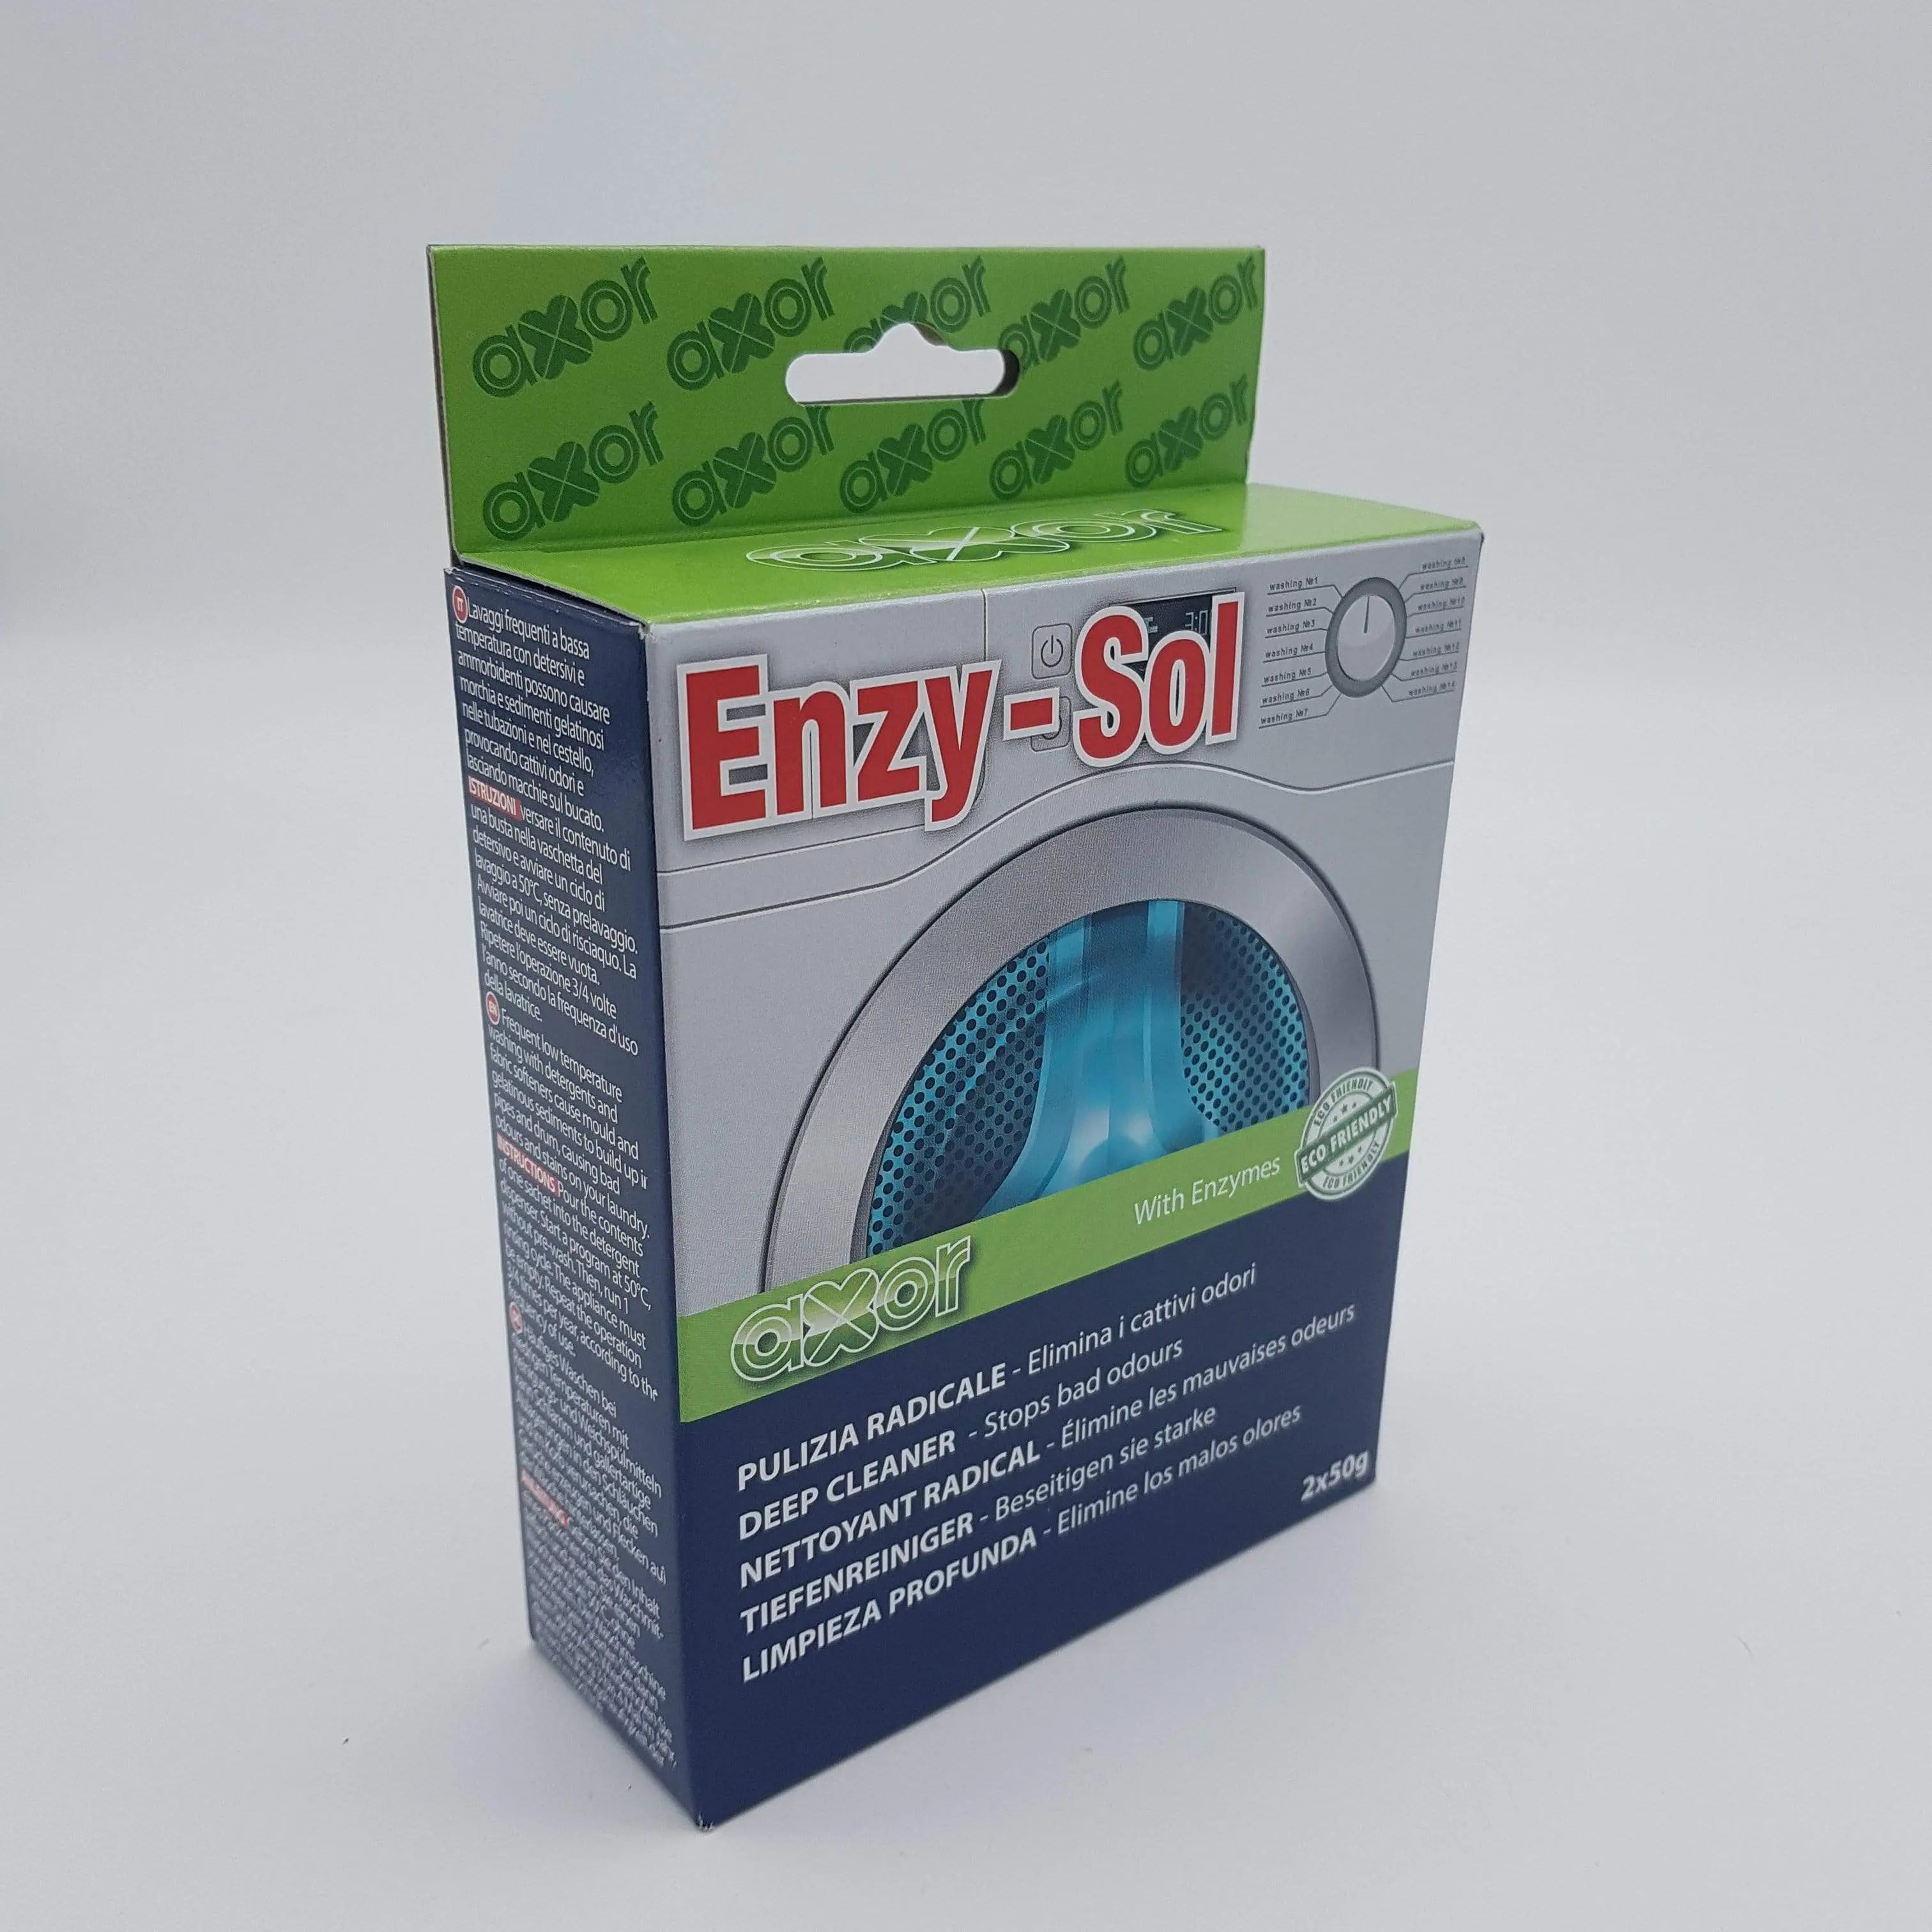 Enzy Sol kit pulizia profonda cattivi odori lavatrice Axor AXOR